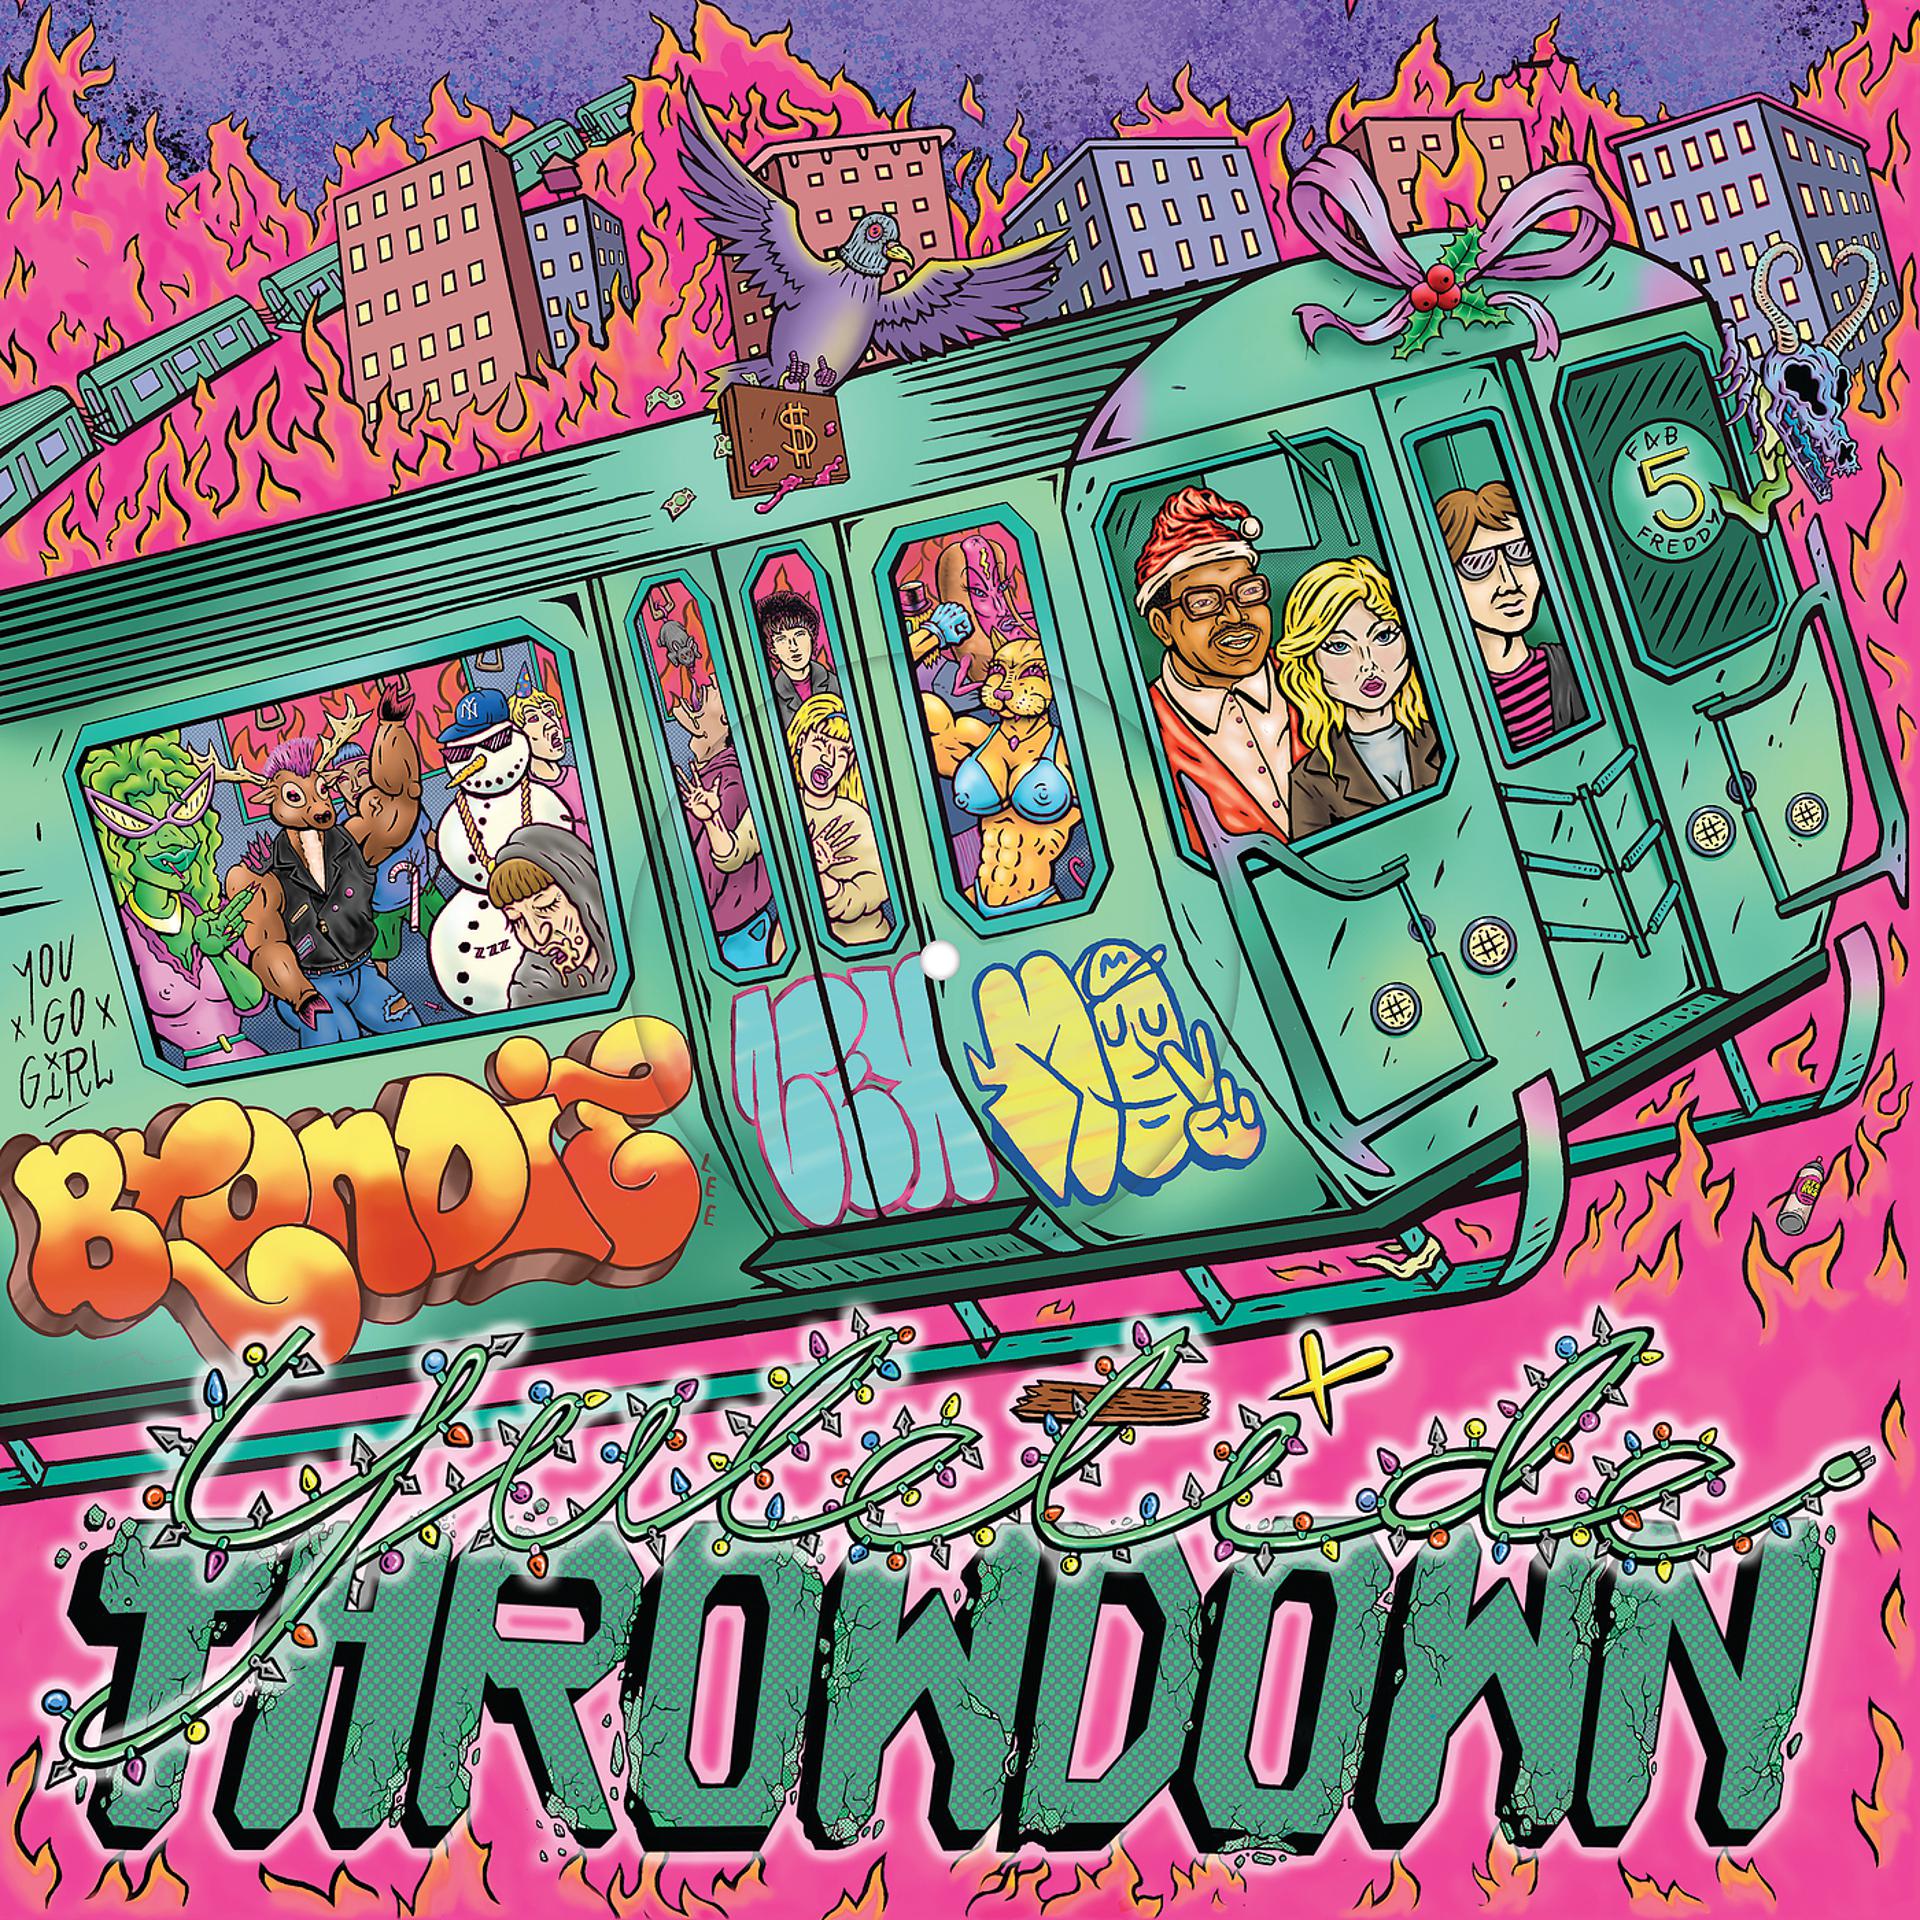 Постер к треку Blondie, Fab 5 Freddy - Yuletide Throwdown